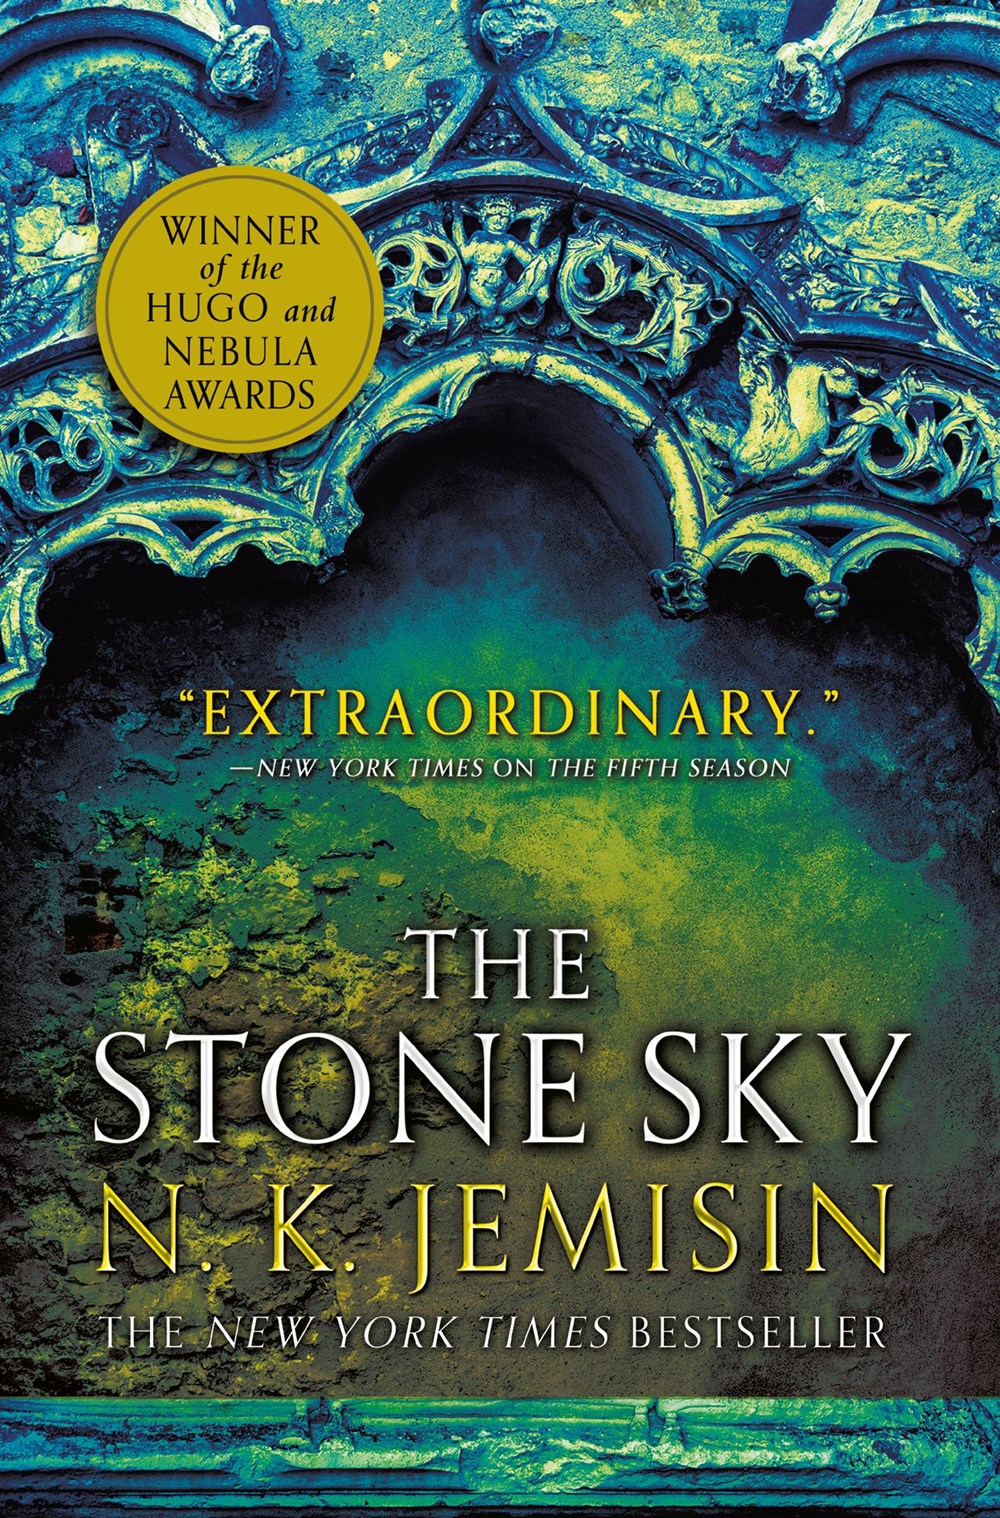 The Stone Sky by N. K. Jemisin (The Broken Earth Trilogy, Book 3)